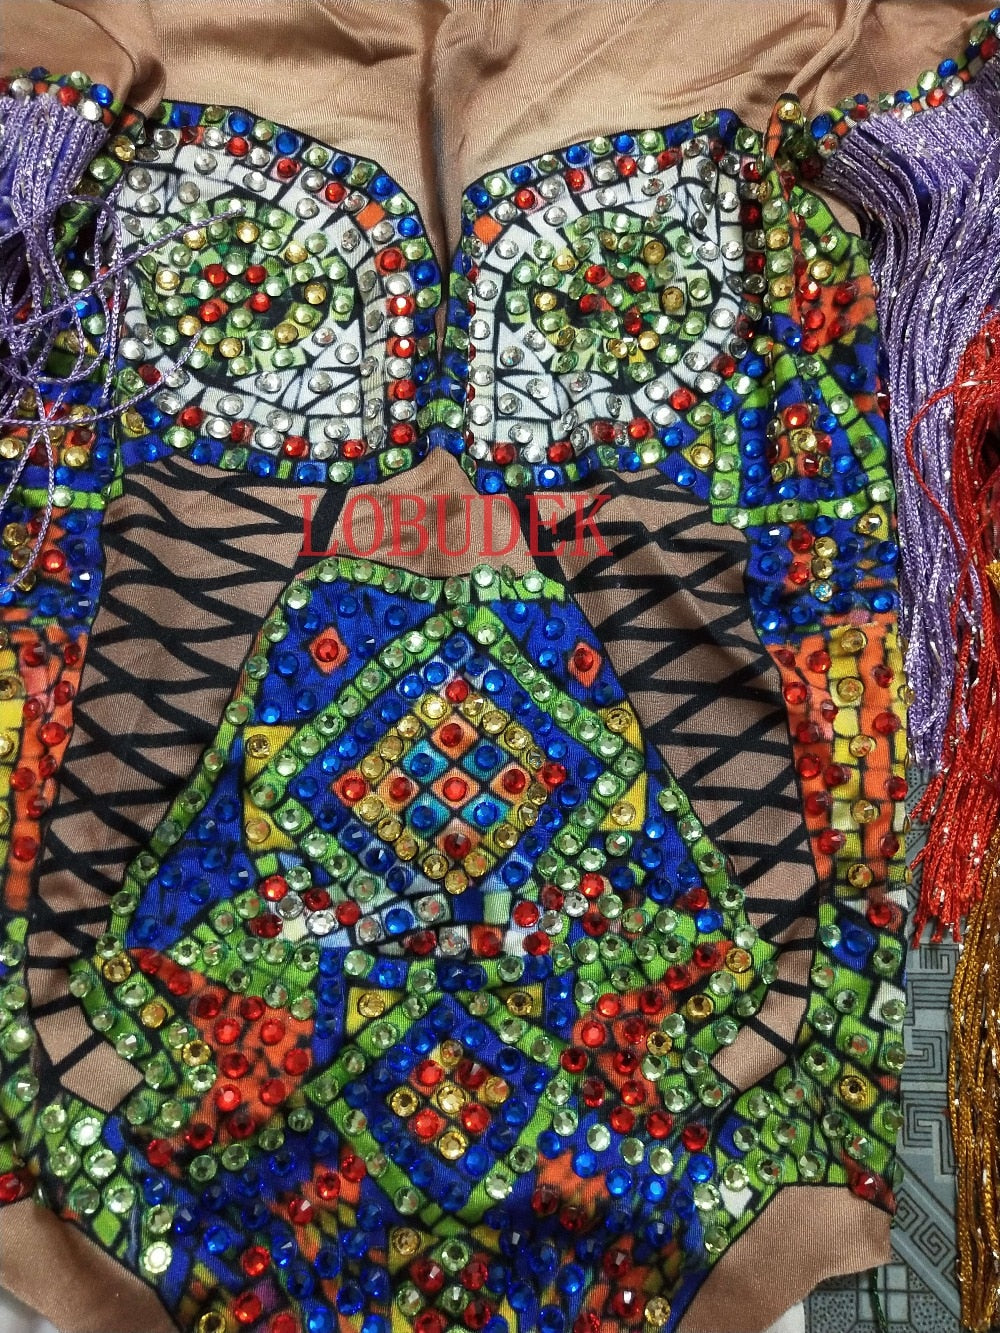 FESTIVAL FASHION - Rainbow Rhinestones Tassel Sleeve Bodysuits - Desert Queen - Religious Art Bodysuit